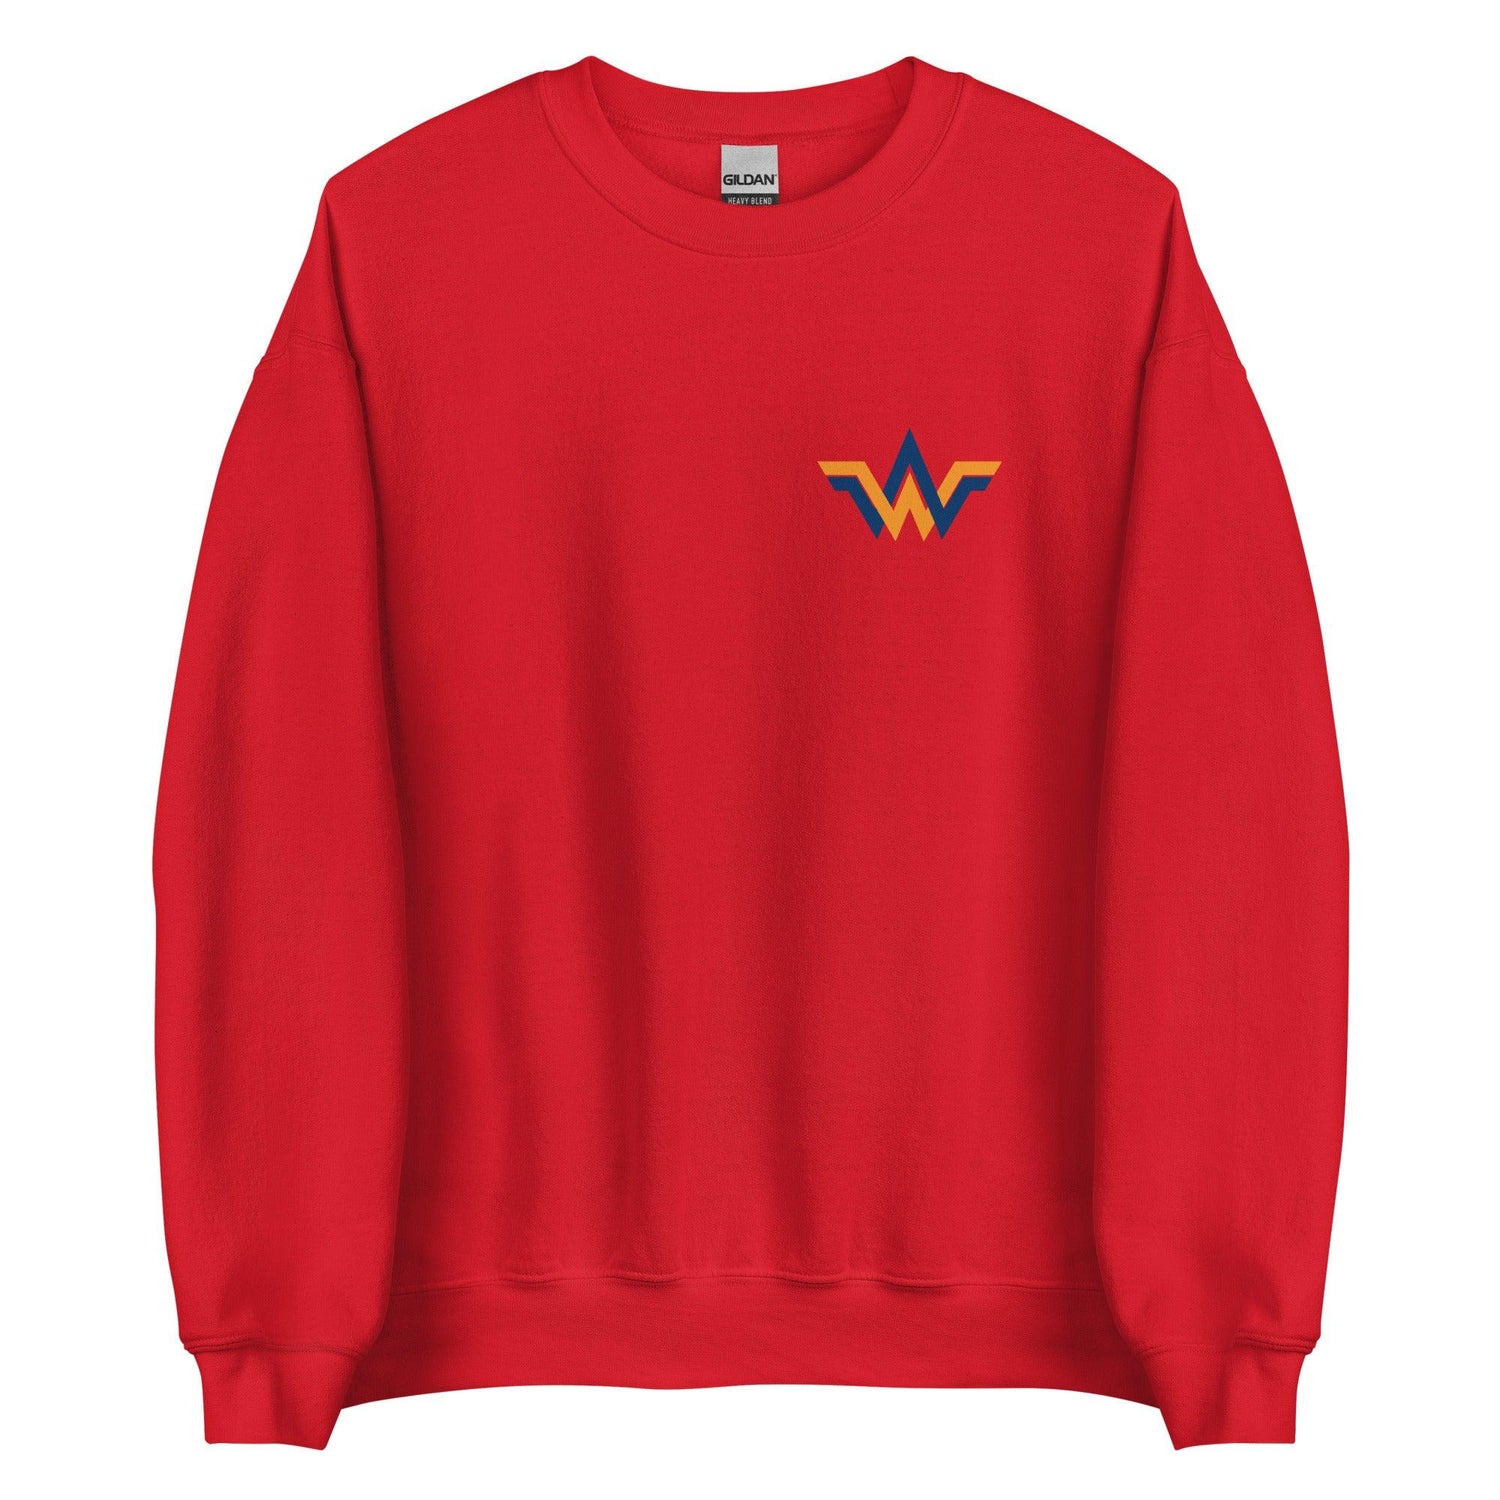 Will Wagner "Signature" Sweatshirt - Fan Arch